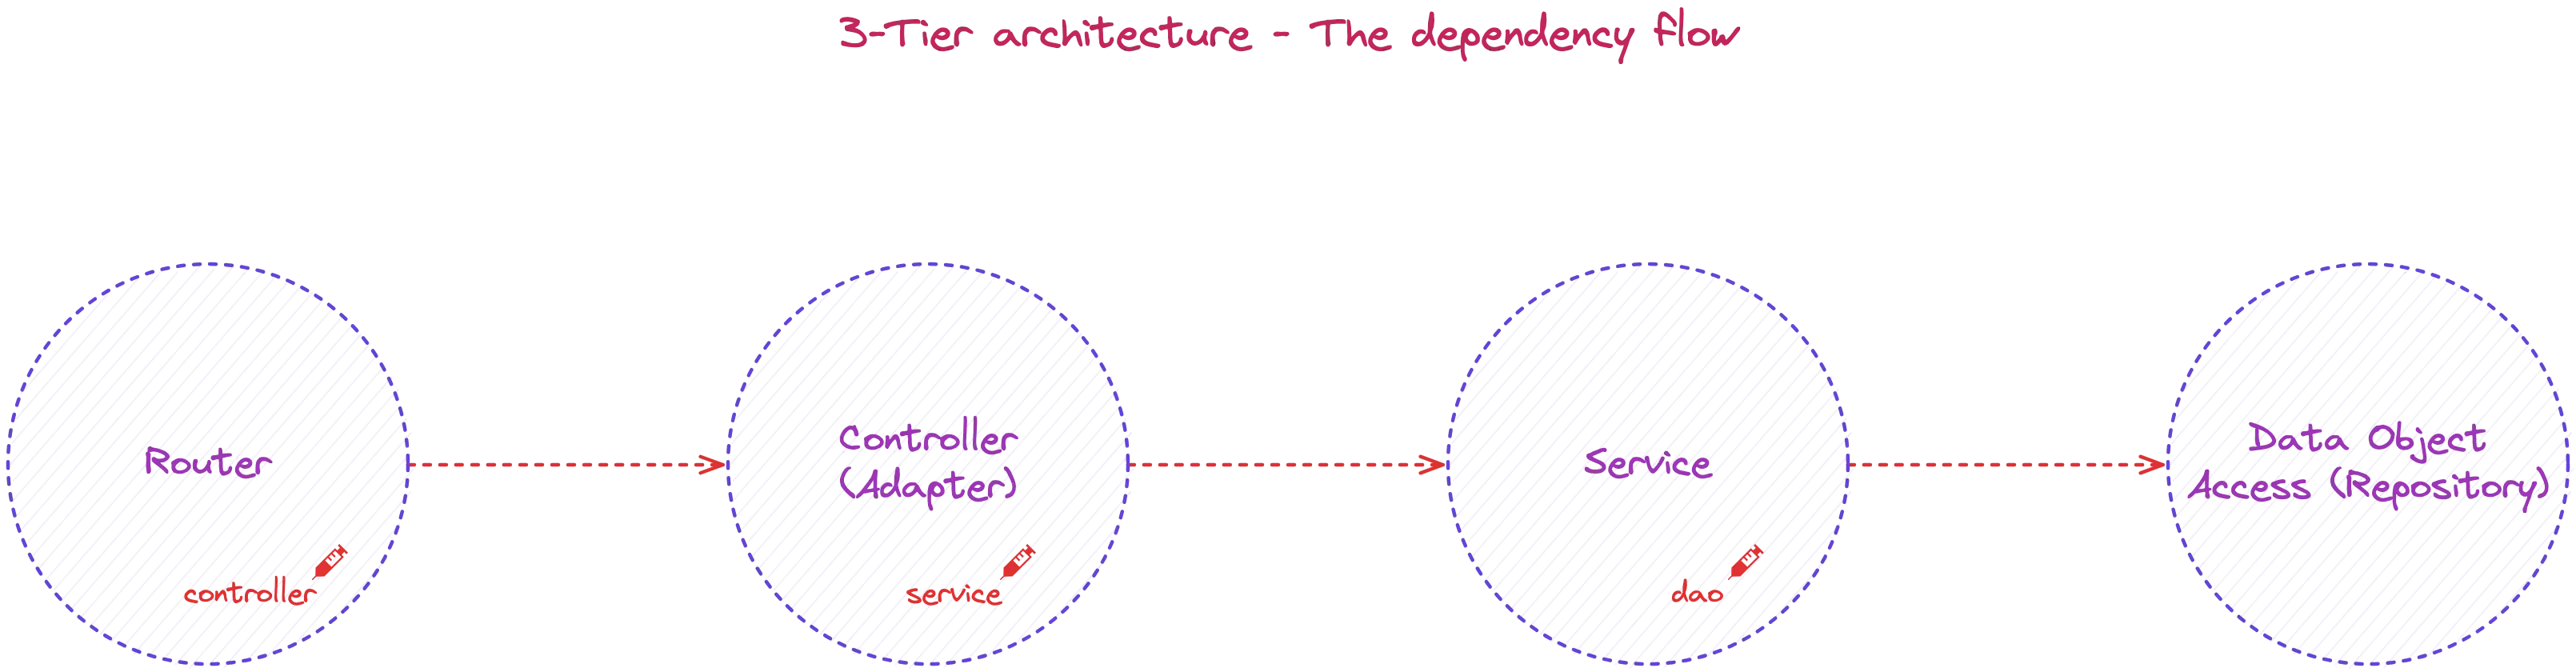 3-tier architecture - Dependency Flow